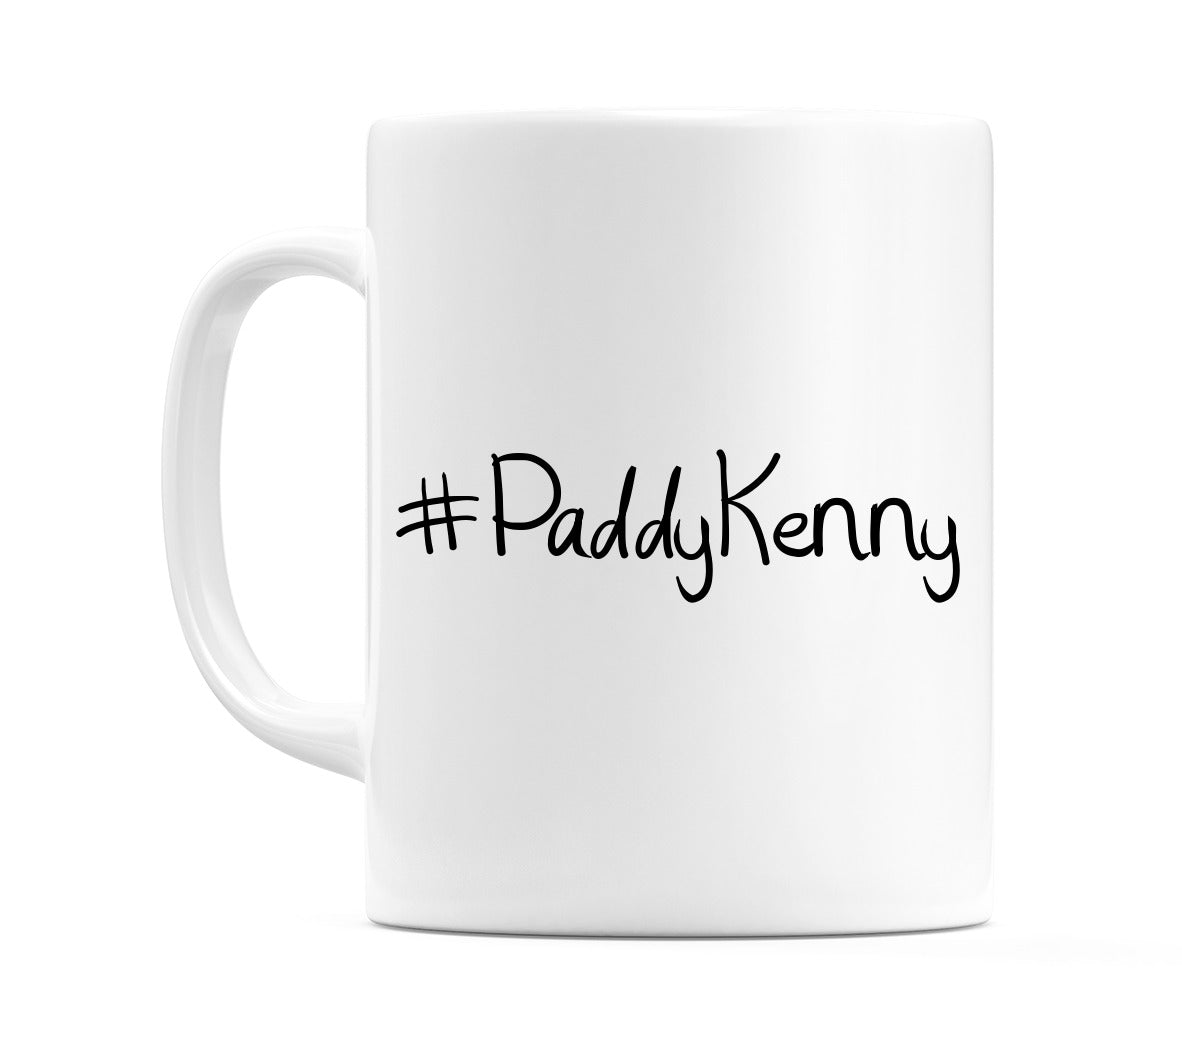 #PaddyKenny Mug